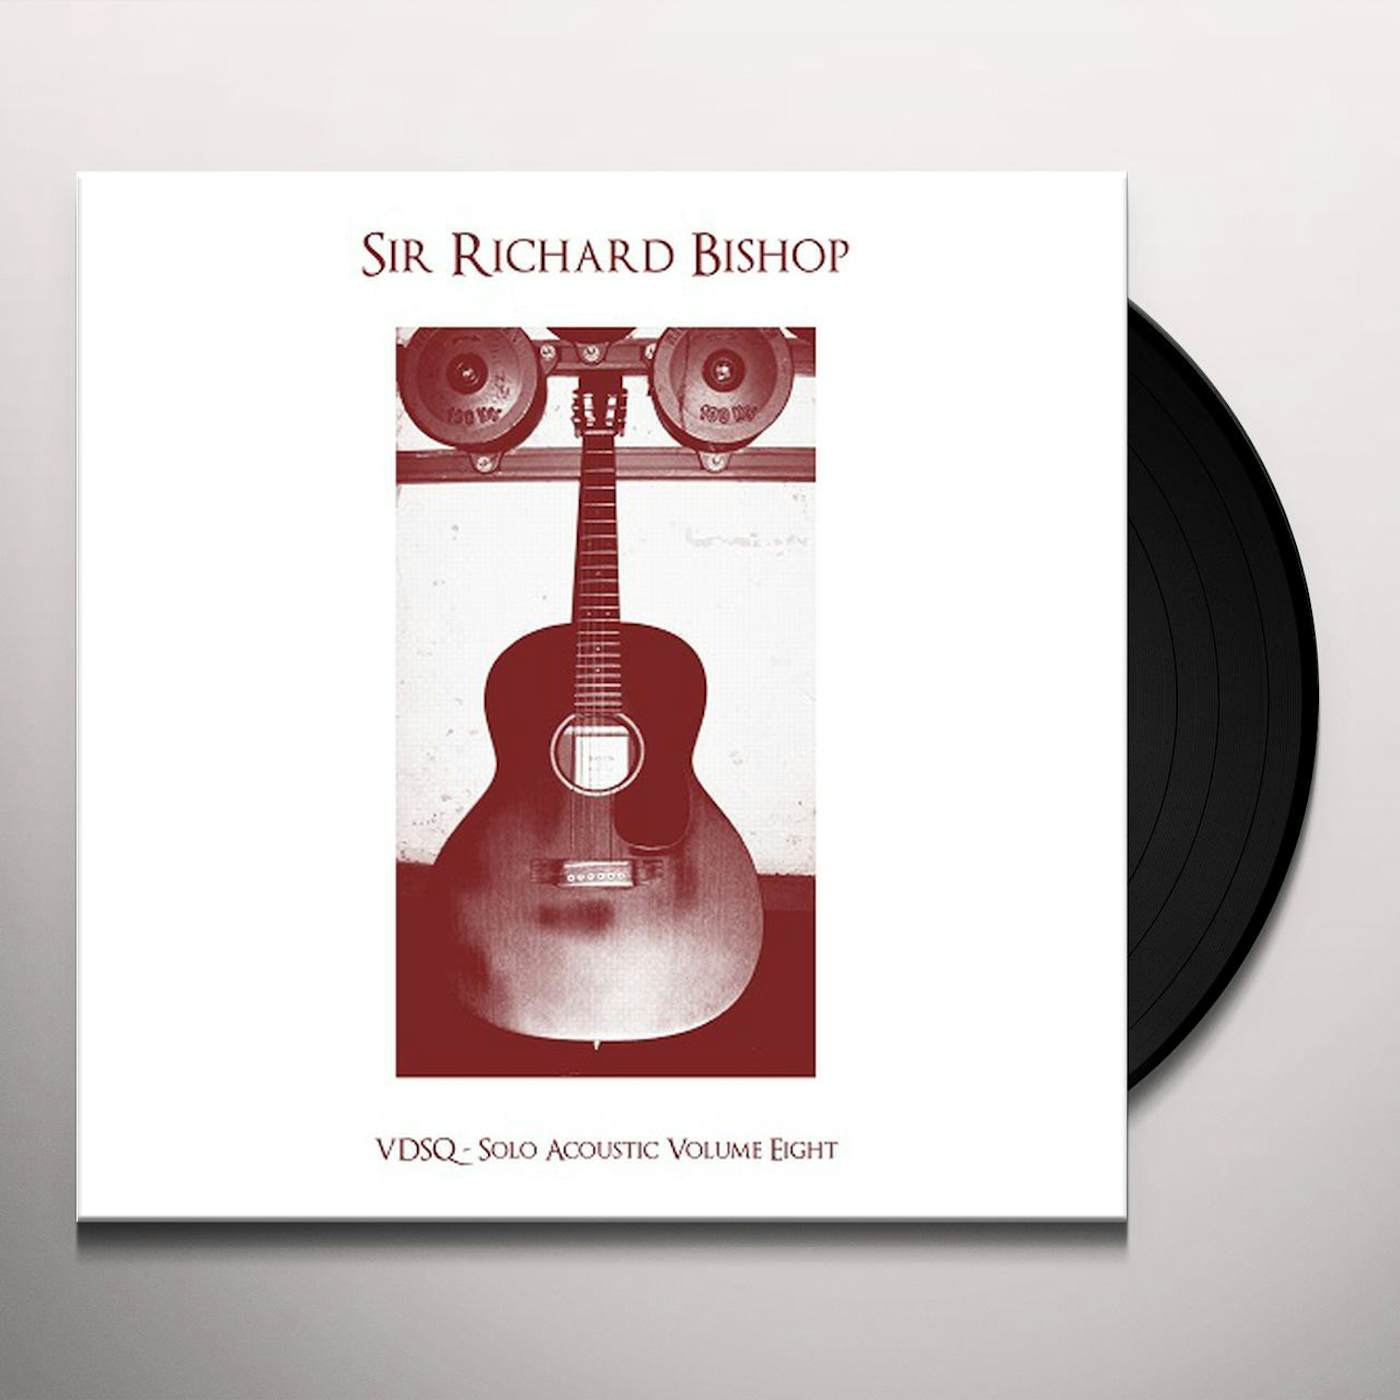 Sir Richard Bishop VDSQ SOLO ACOUSTIC VOL. 8 Vinyl Record